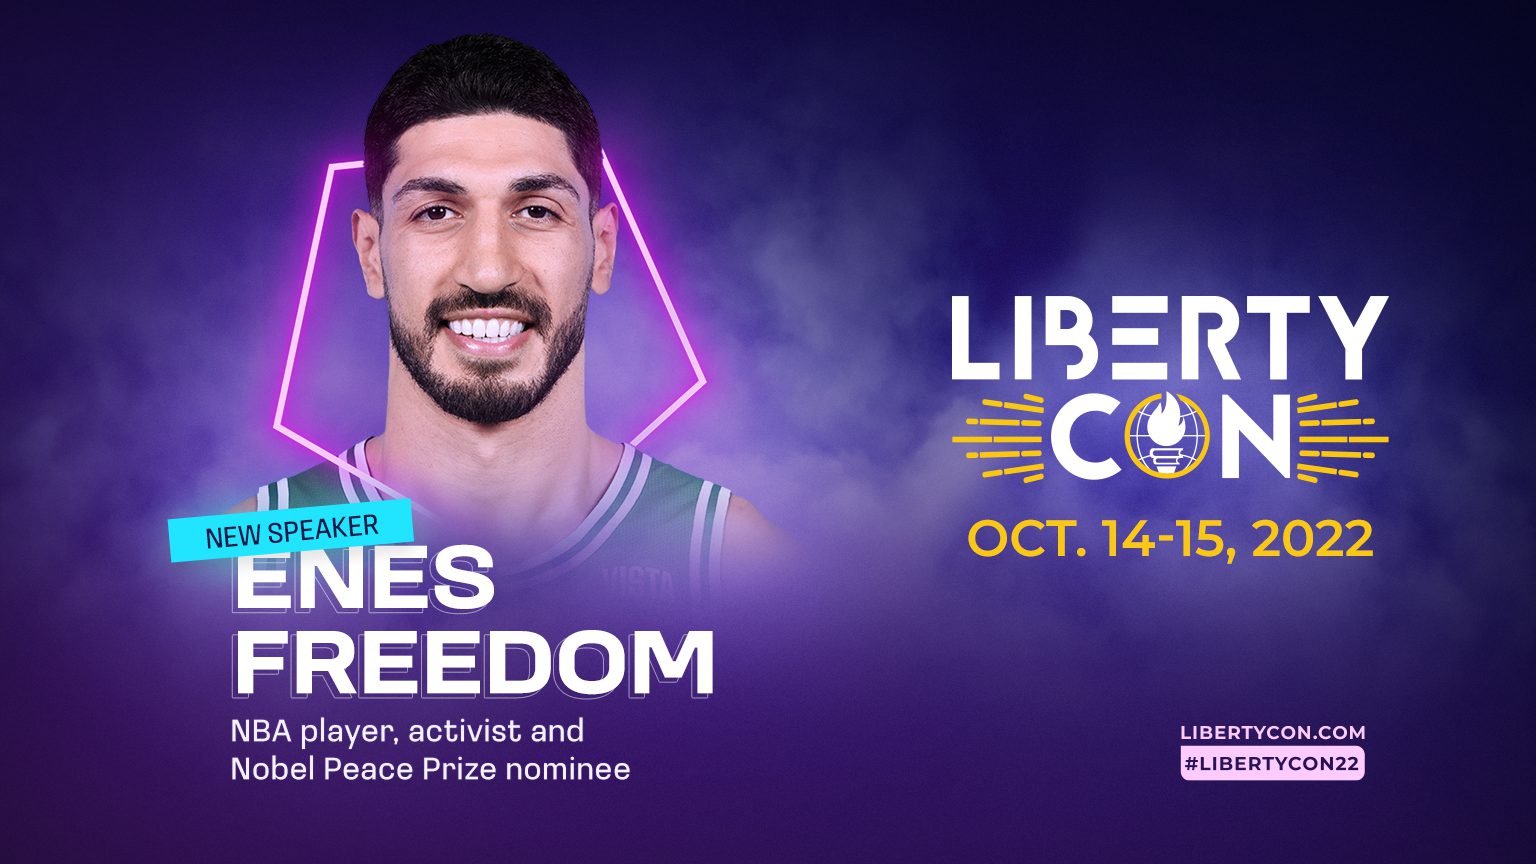 Enes Kanter Freedom will be at LibertyCon International